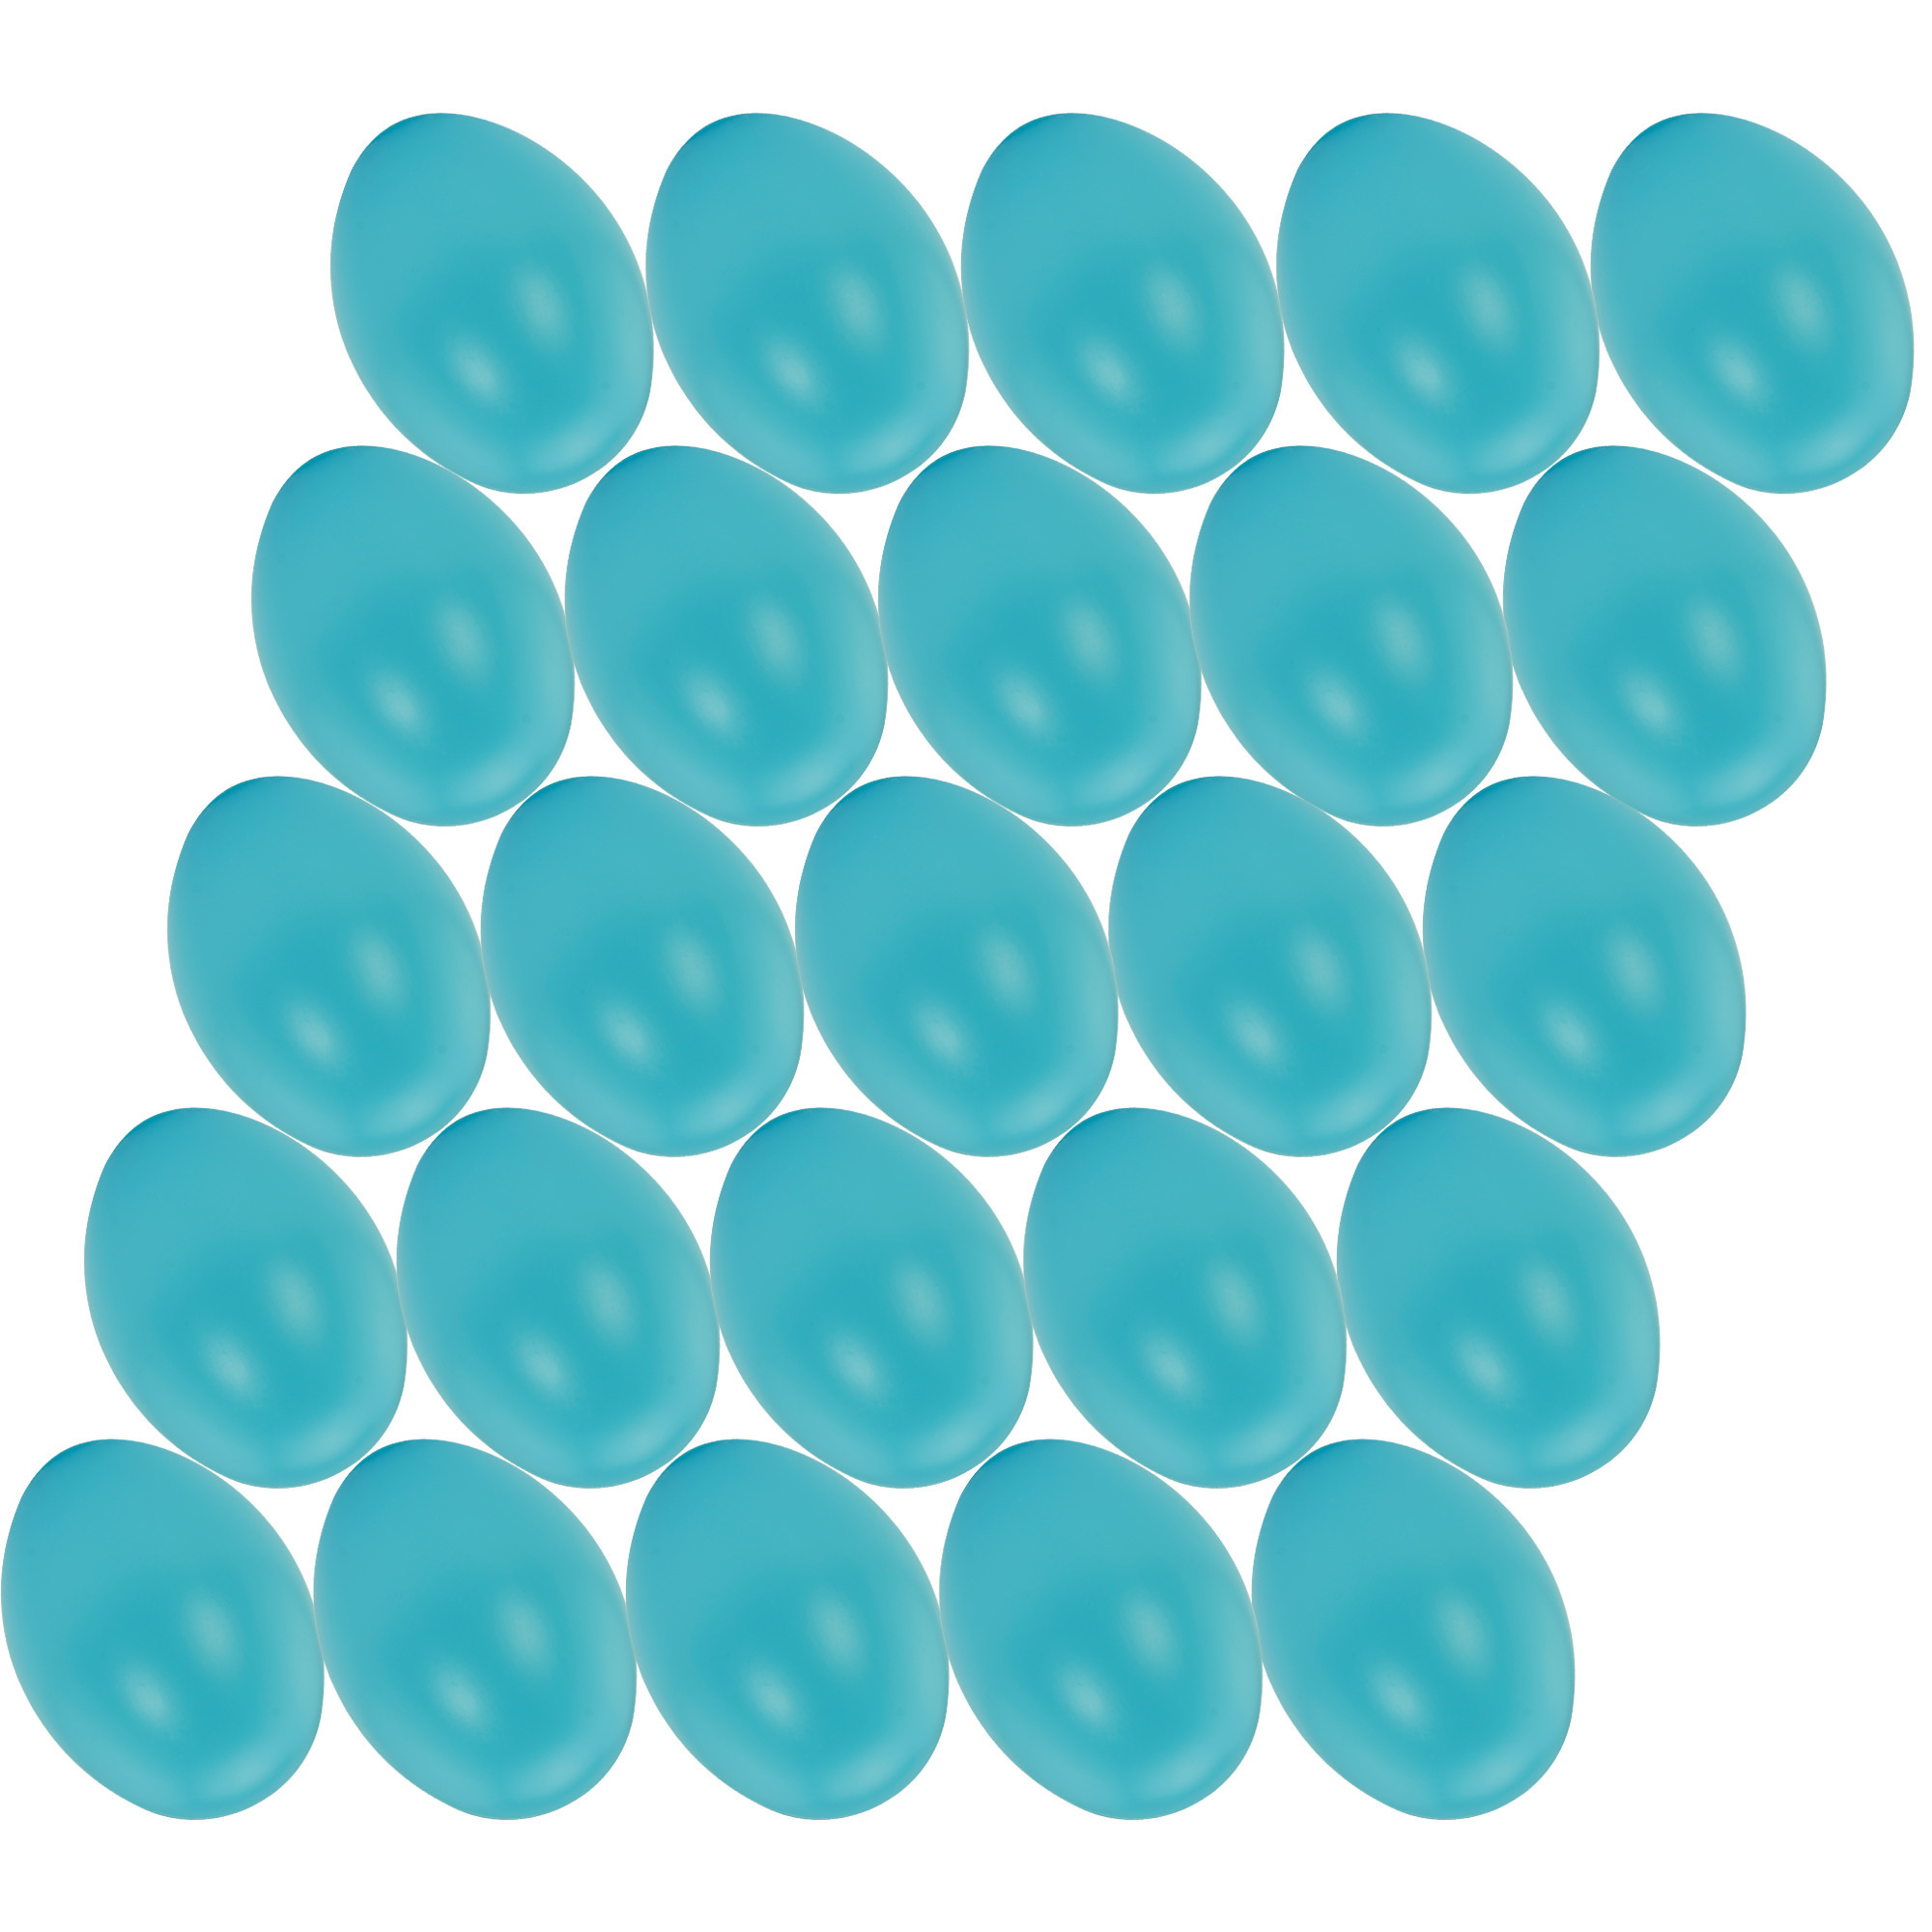 25x stuks lichtblauw hobby knutselen eieren van plastic 4.5 cm